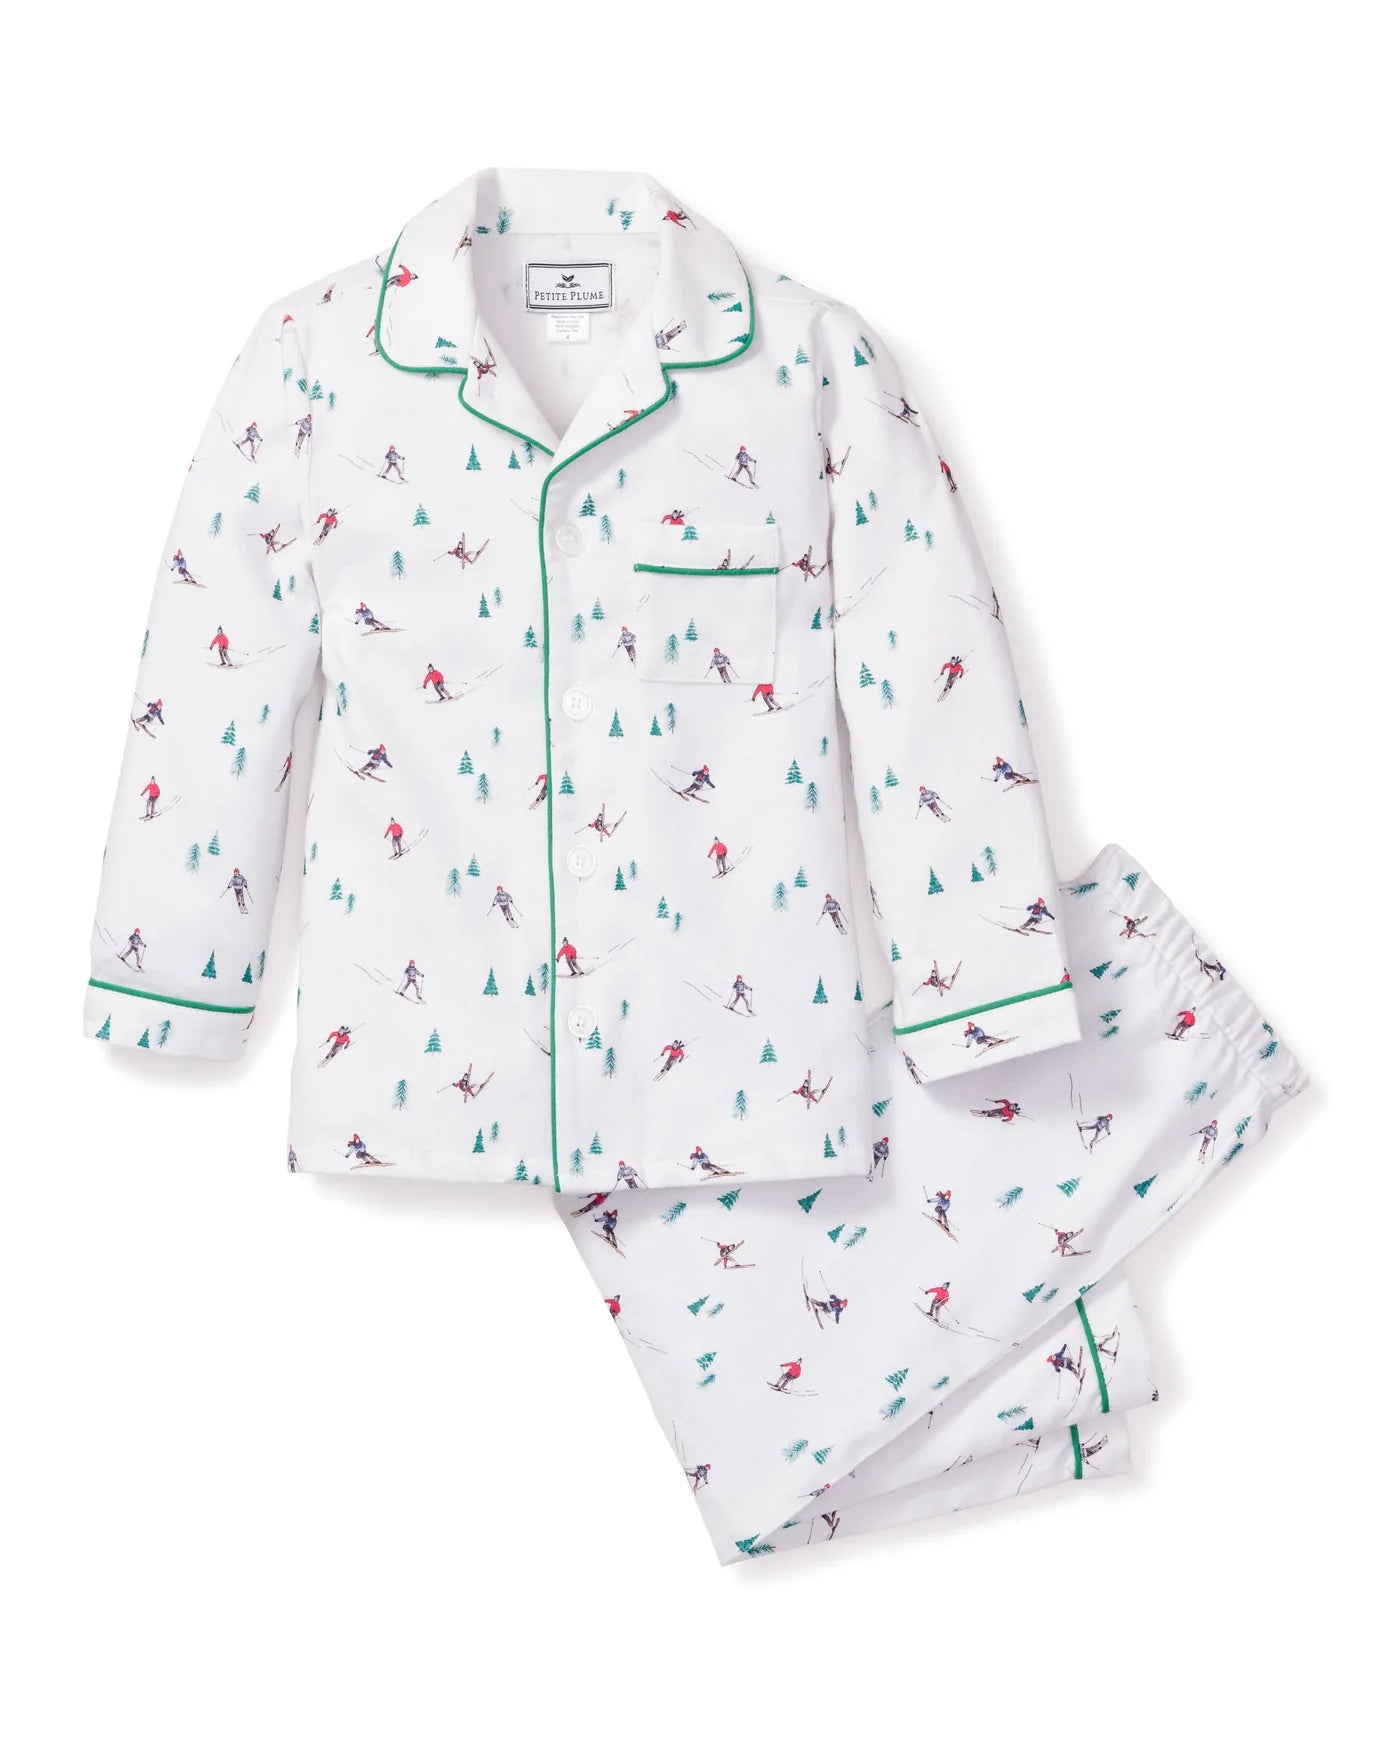 Petite Plume Apres Ski Pajama Set